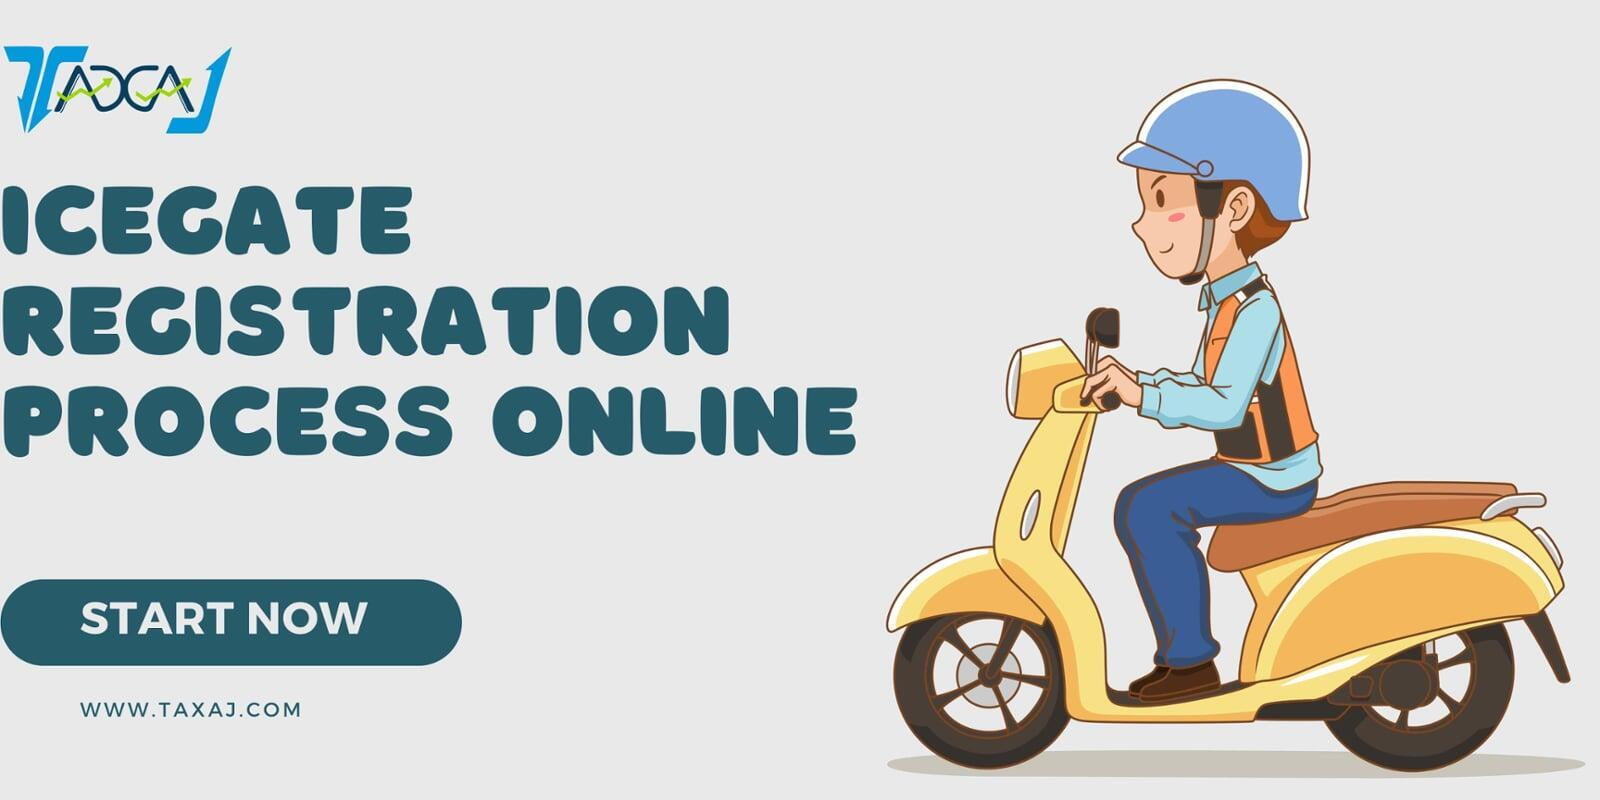 IceGate Registration Process Online